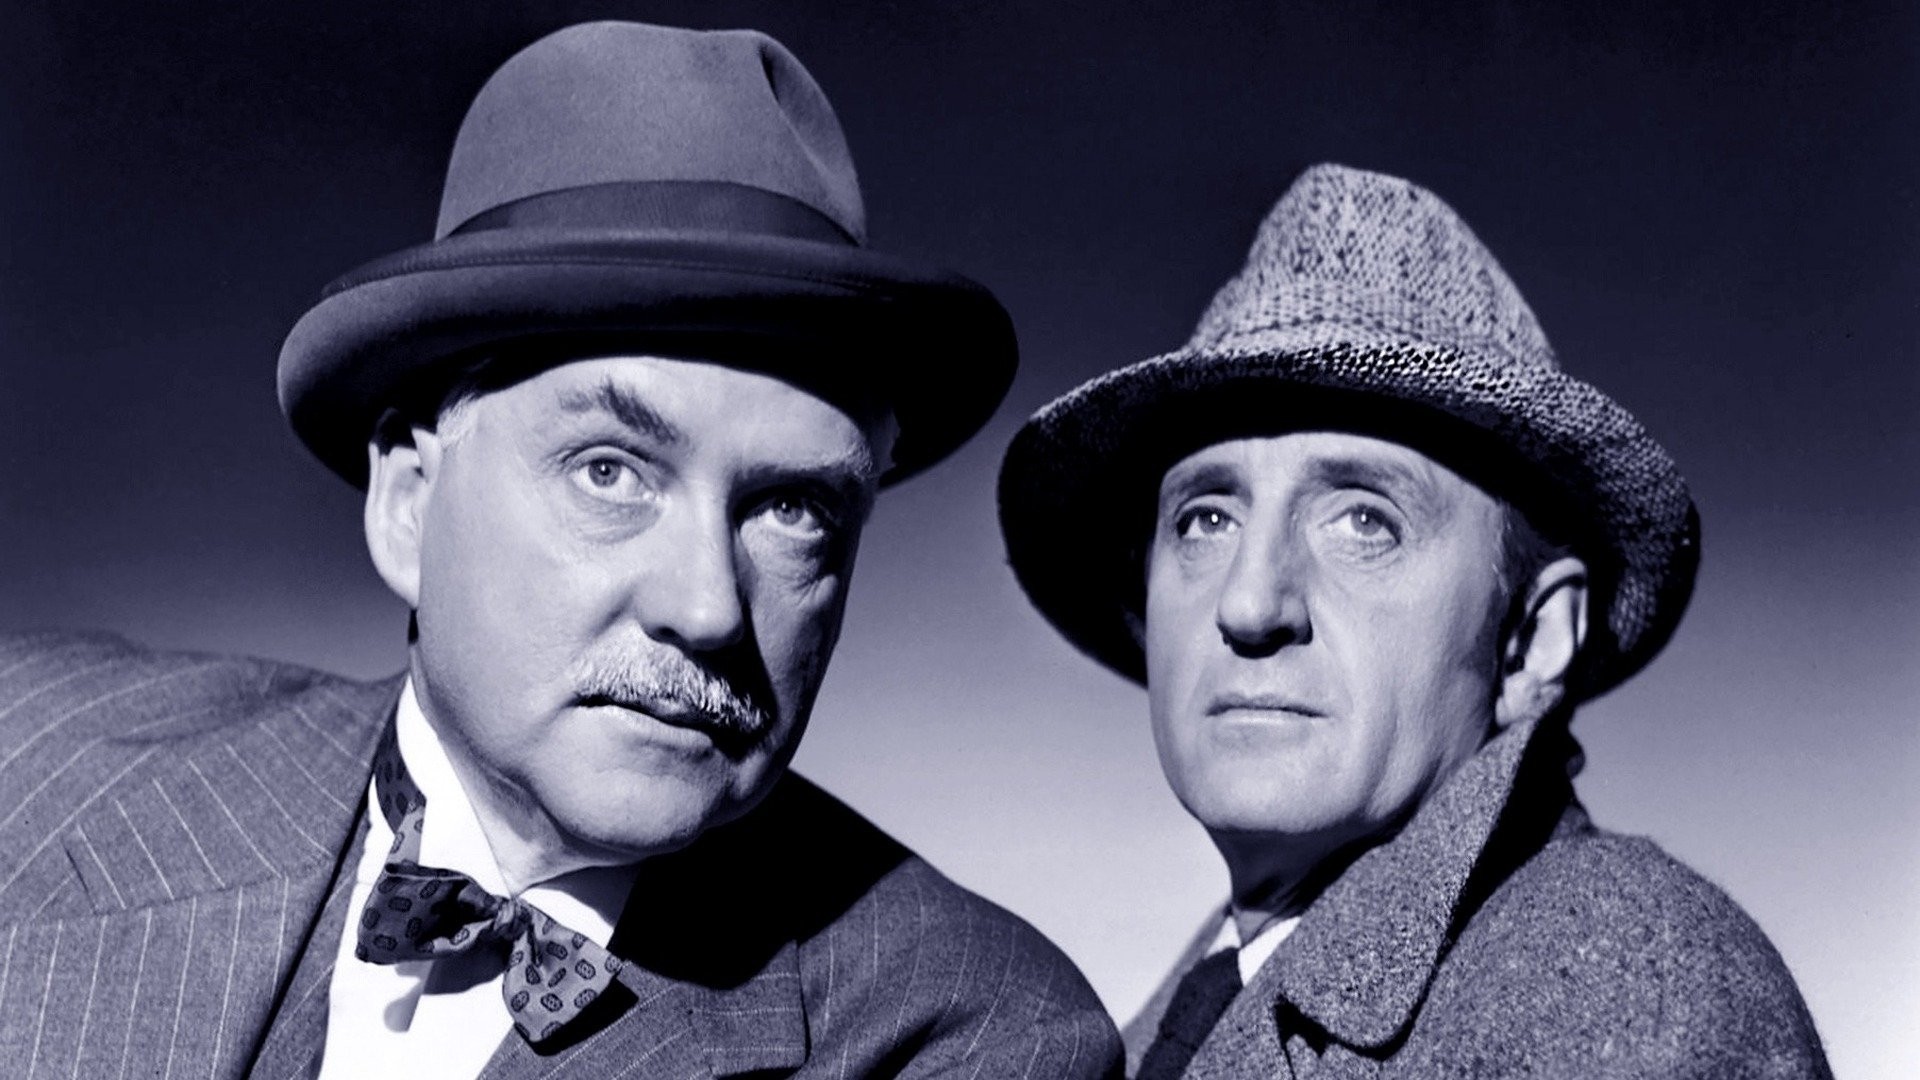 Sherlock Holmes and the Voice of Terror (1942) - IMDb